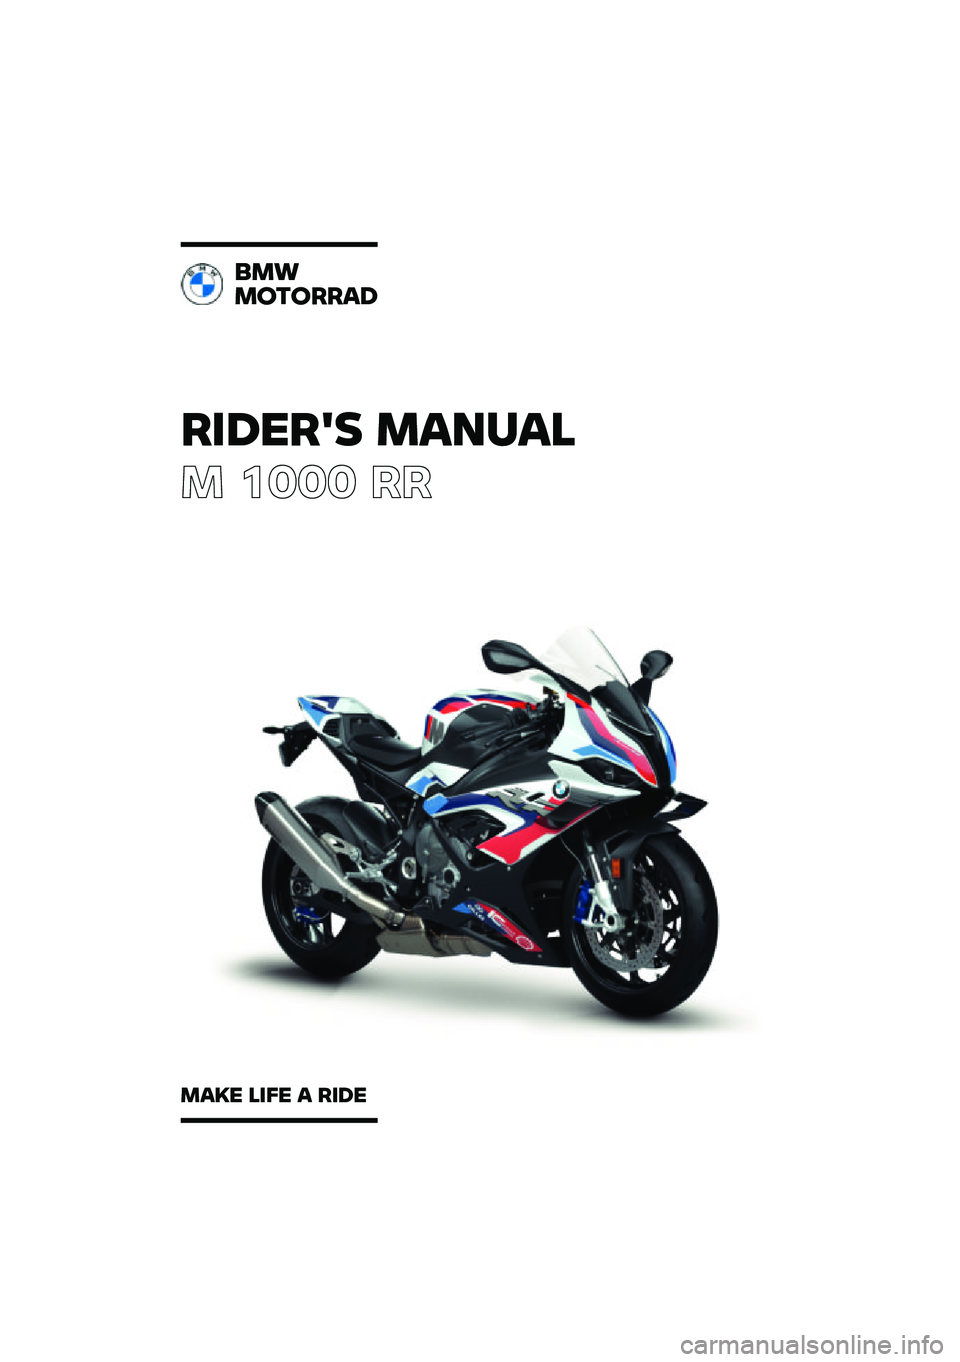 BMW MOTORRAD M 1000 RR 2021  Riders Manual (in English) ������� �\b�	�
��	�\f
� ���� ��
�
�\b�
�\b������	�
�\b�	�� �\f��� �	 ���� 